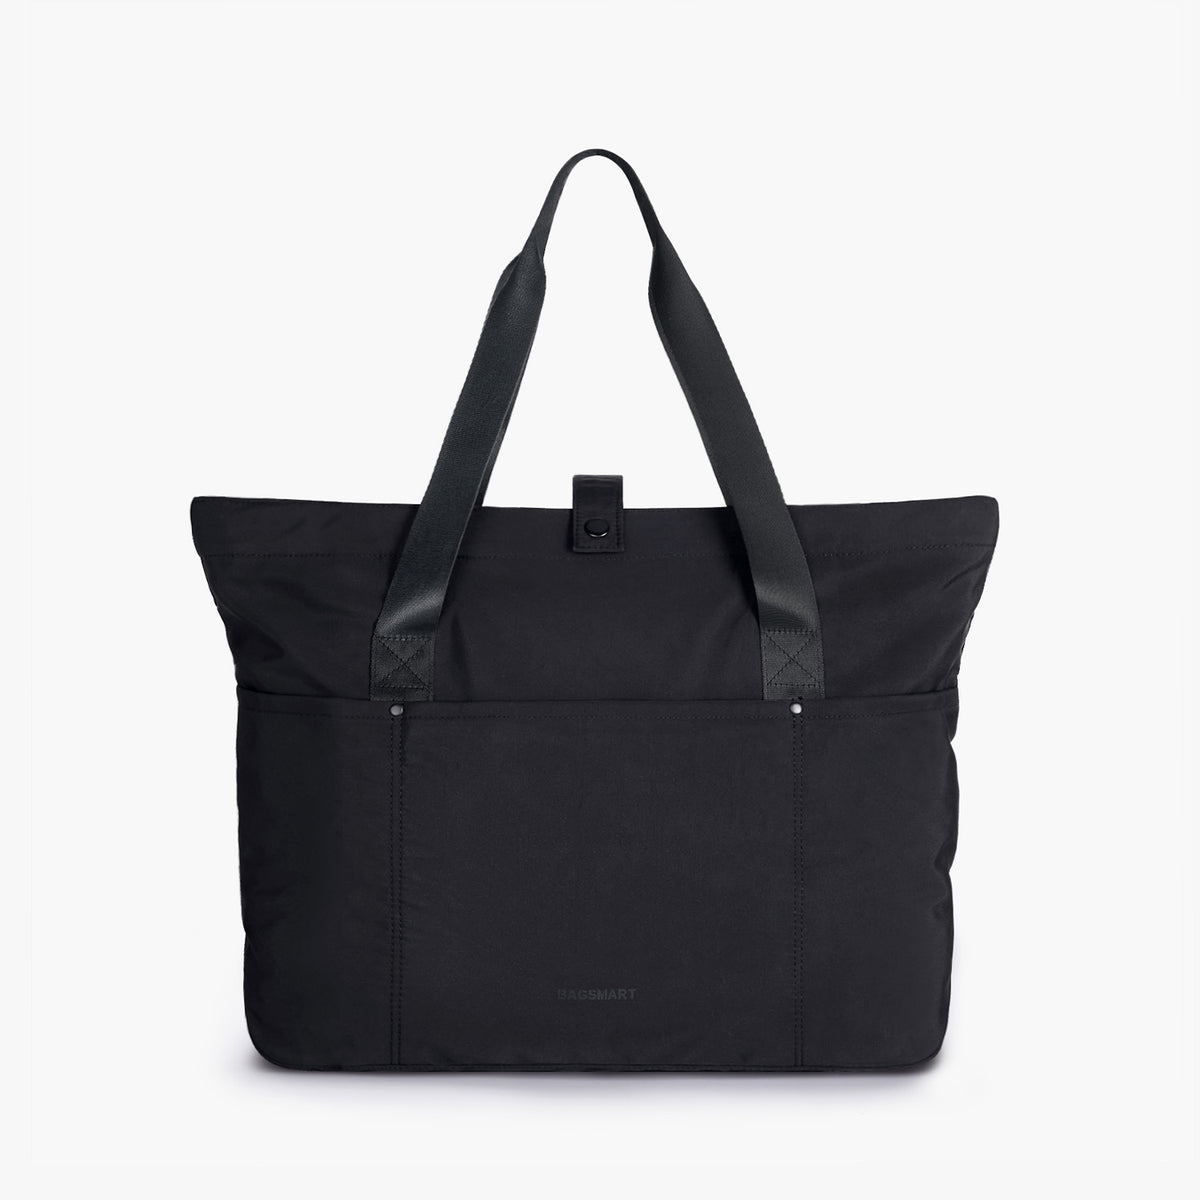 Bagsmart Women Bag, Capacity Tote Bag, Big Shopper Women